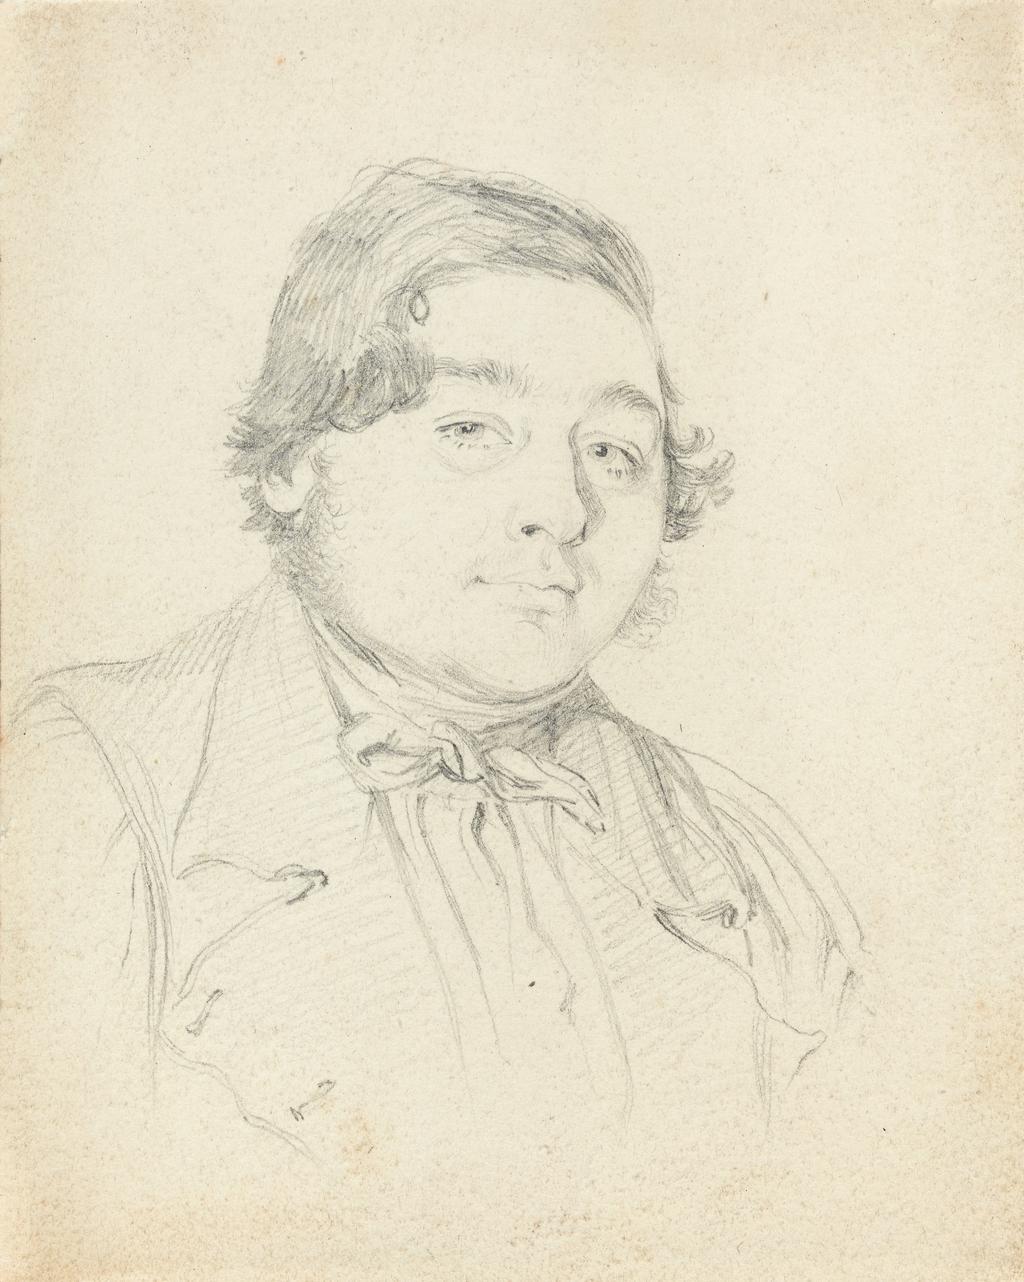 An image of William Wolfe Alais (British, active c.1829-1833). Sketch of Chartist Prisoner taken in court (unknown). Graphite on paper. Circa 1830s.